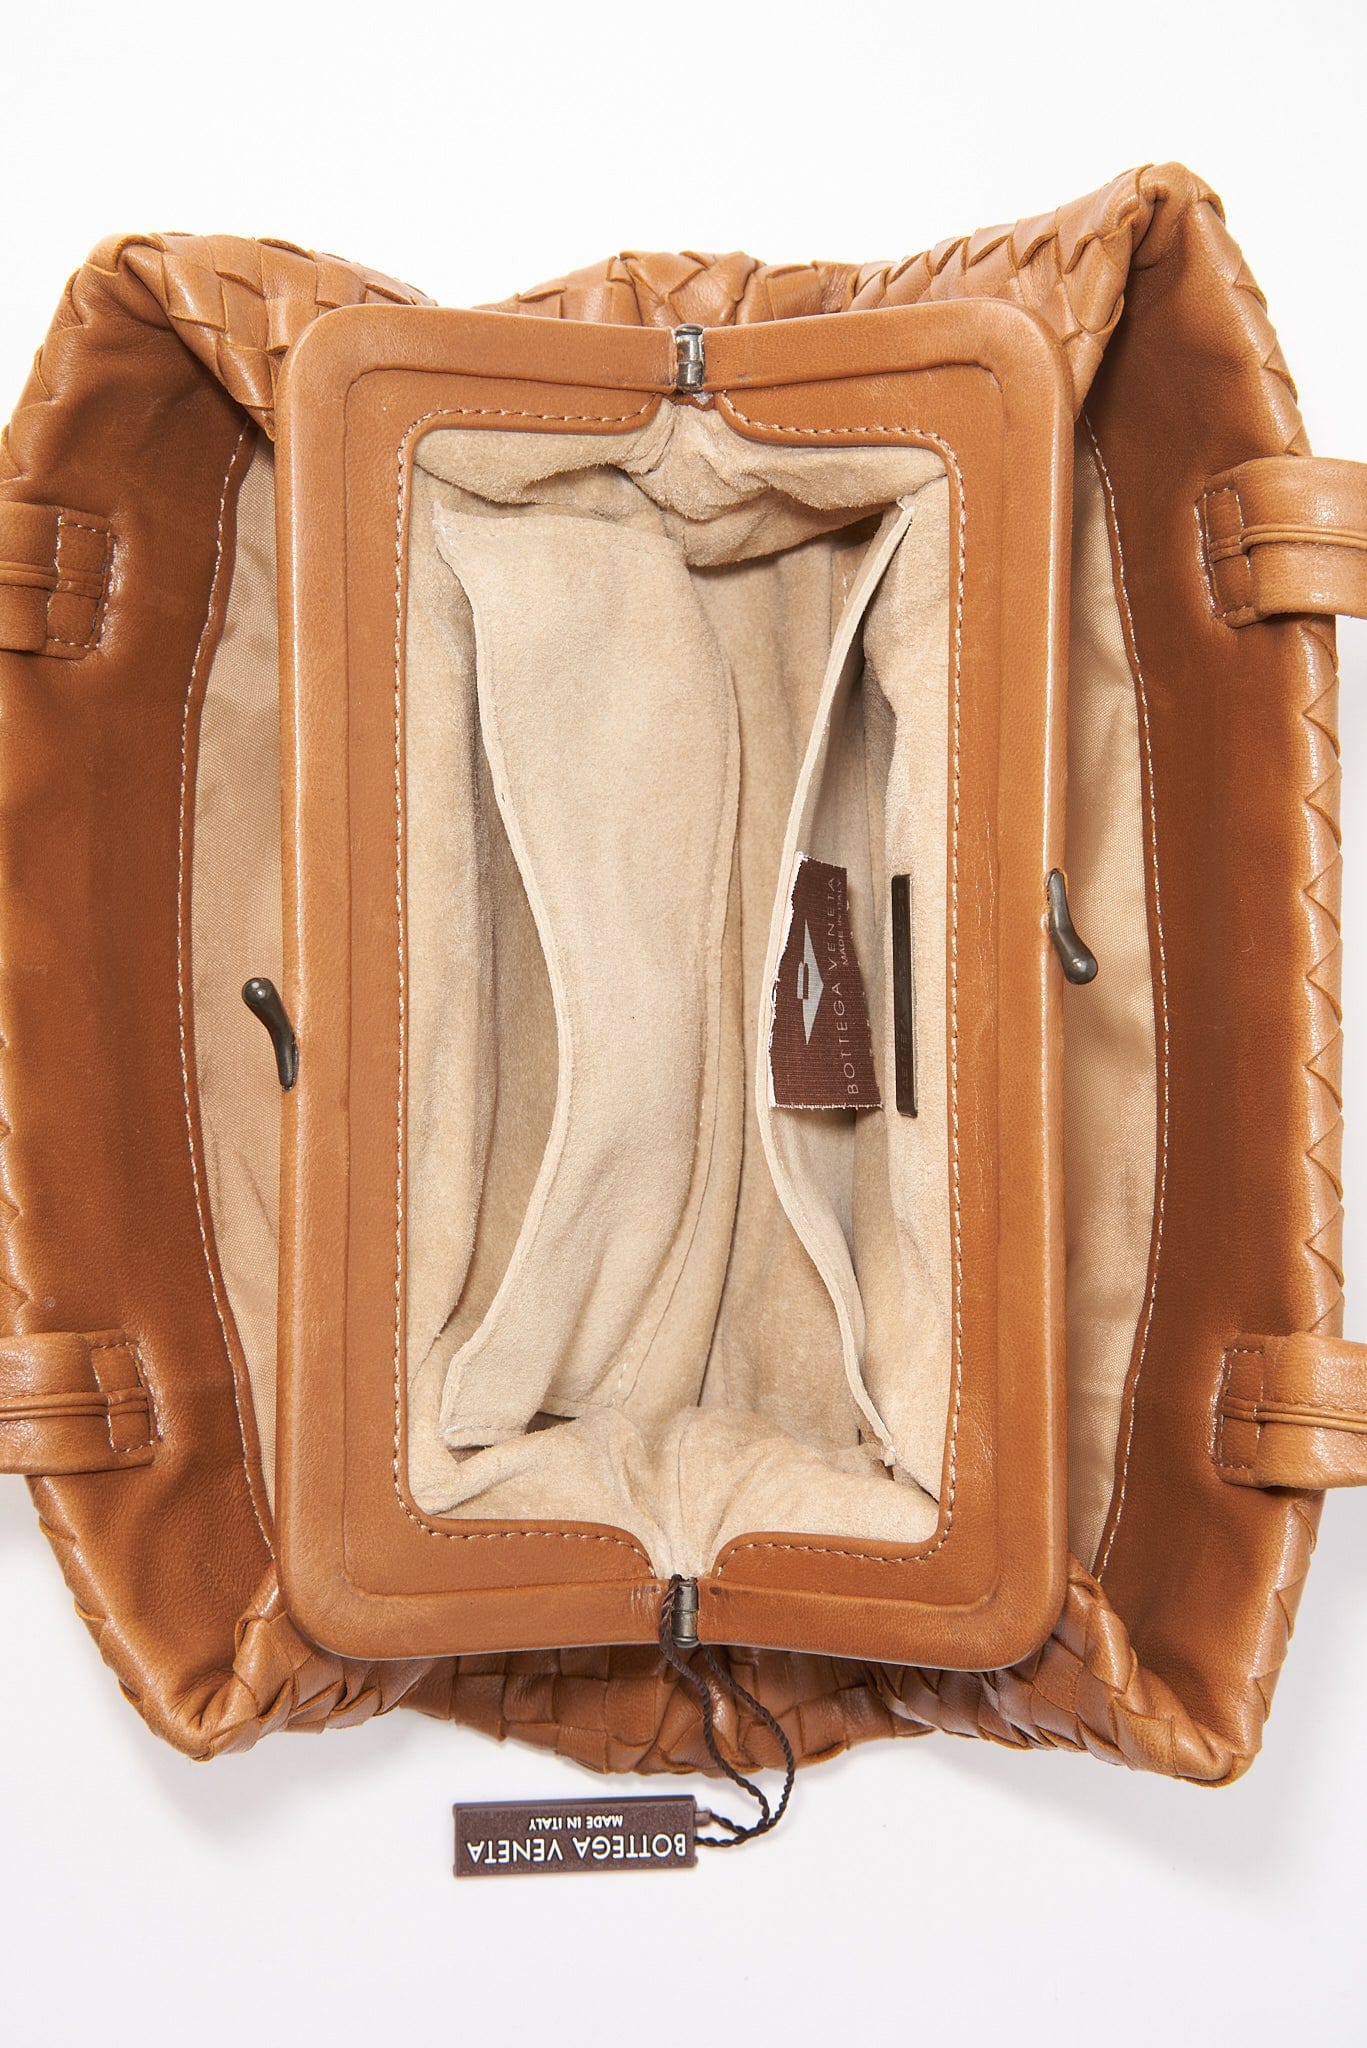 Vintage Bottega Veneta Intrecciato Beige Leather Top Handle Bag